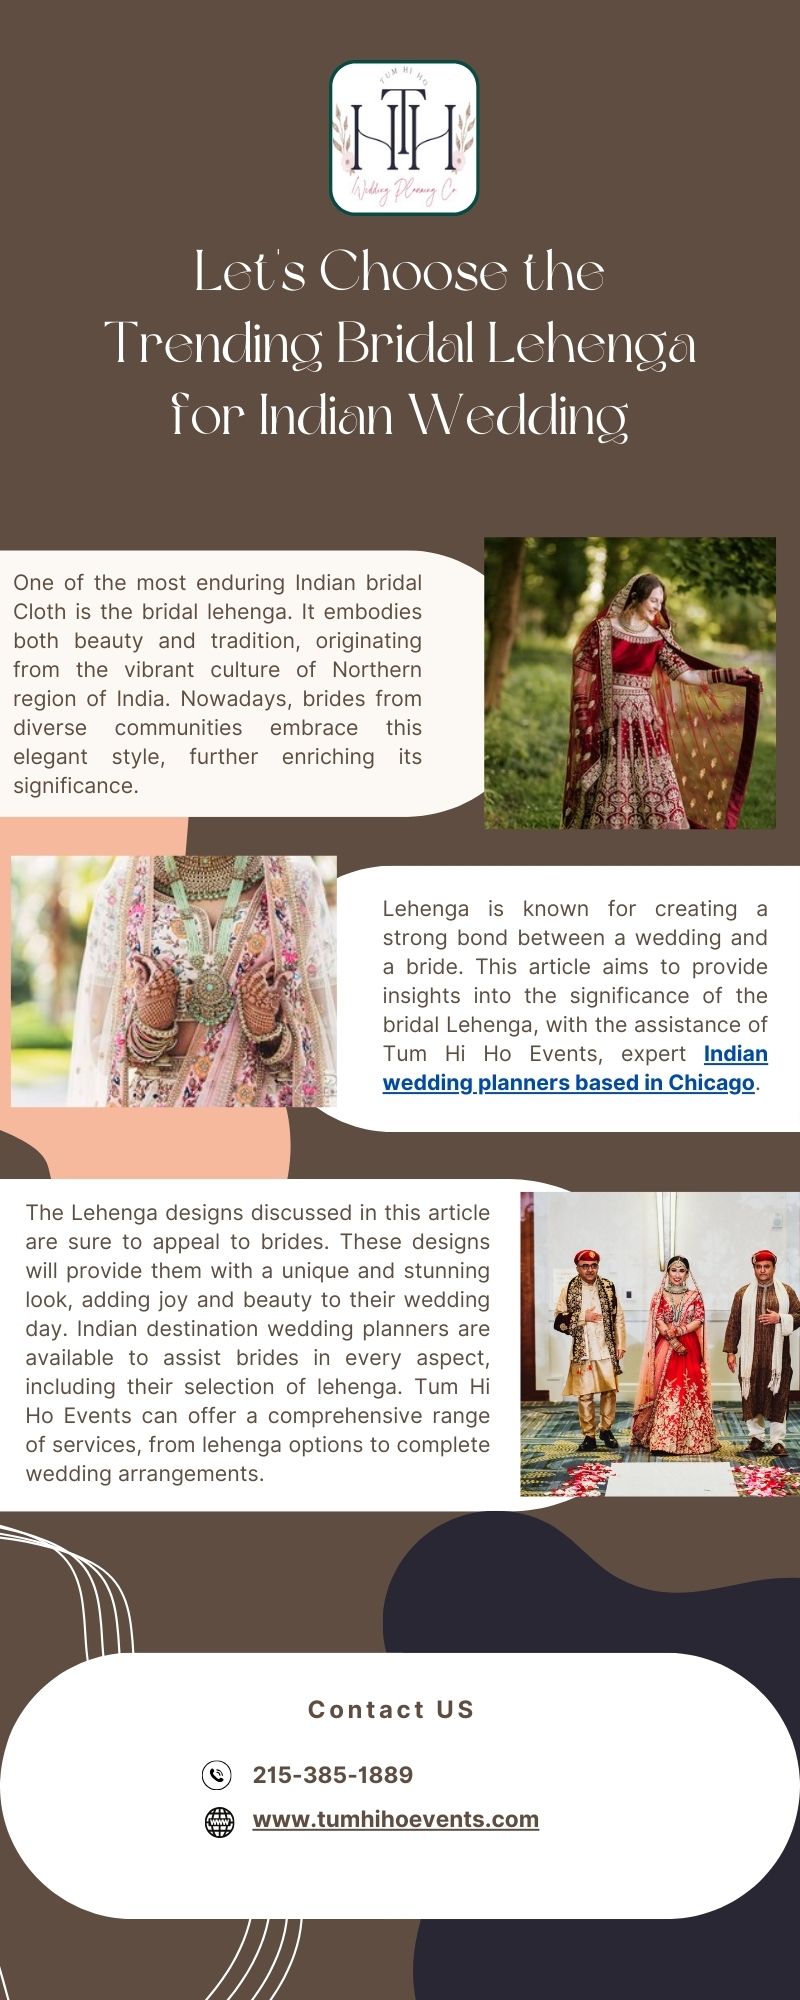 Let’s Choose the Trending Bridal Lehenga for Indian Wedding